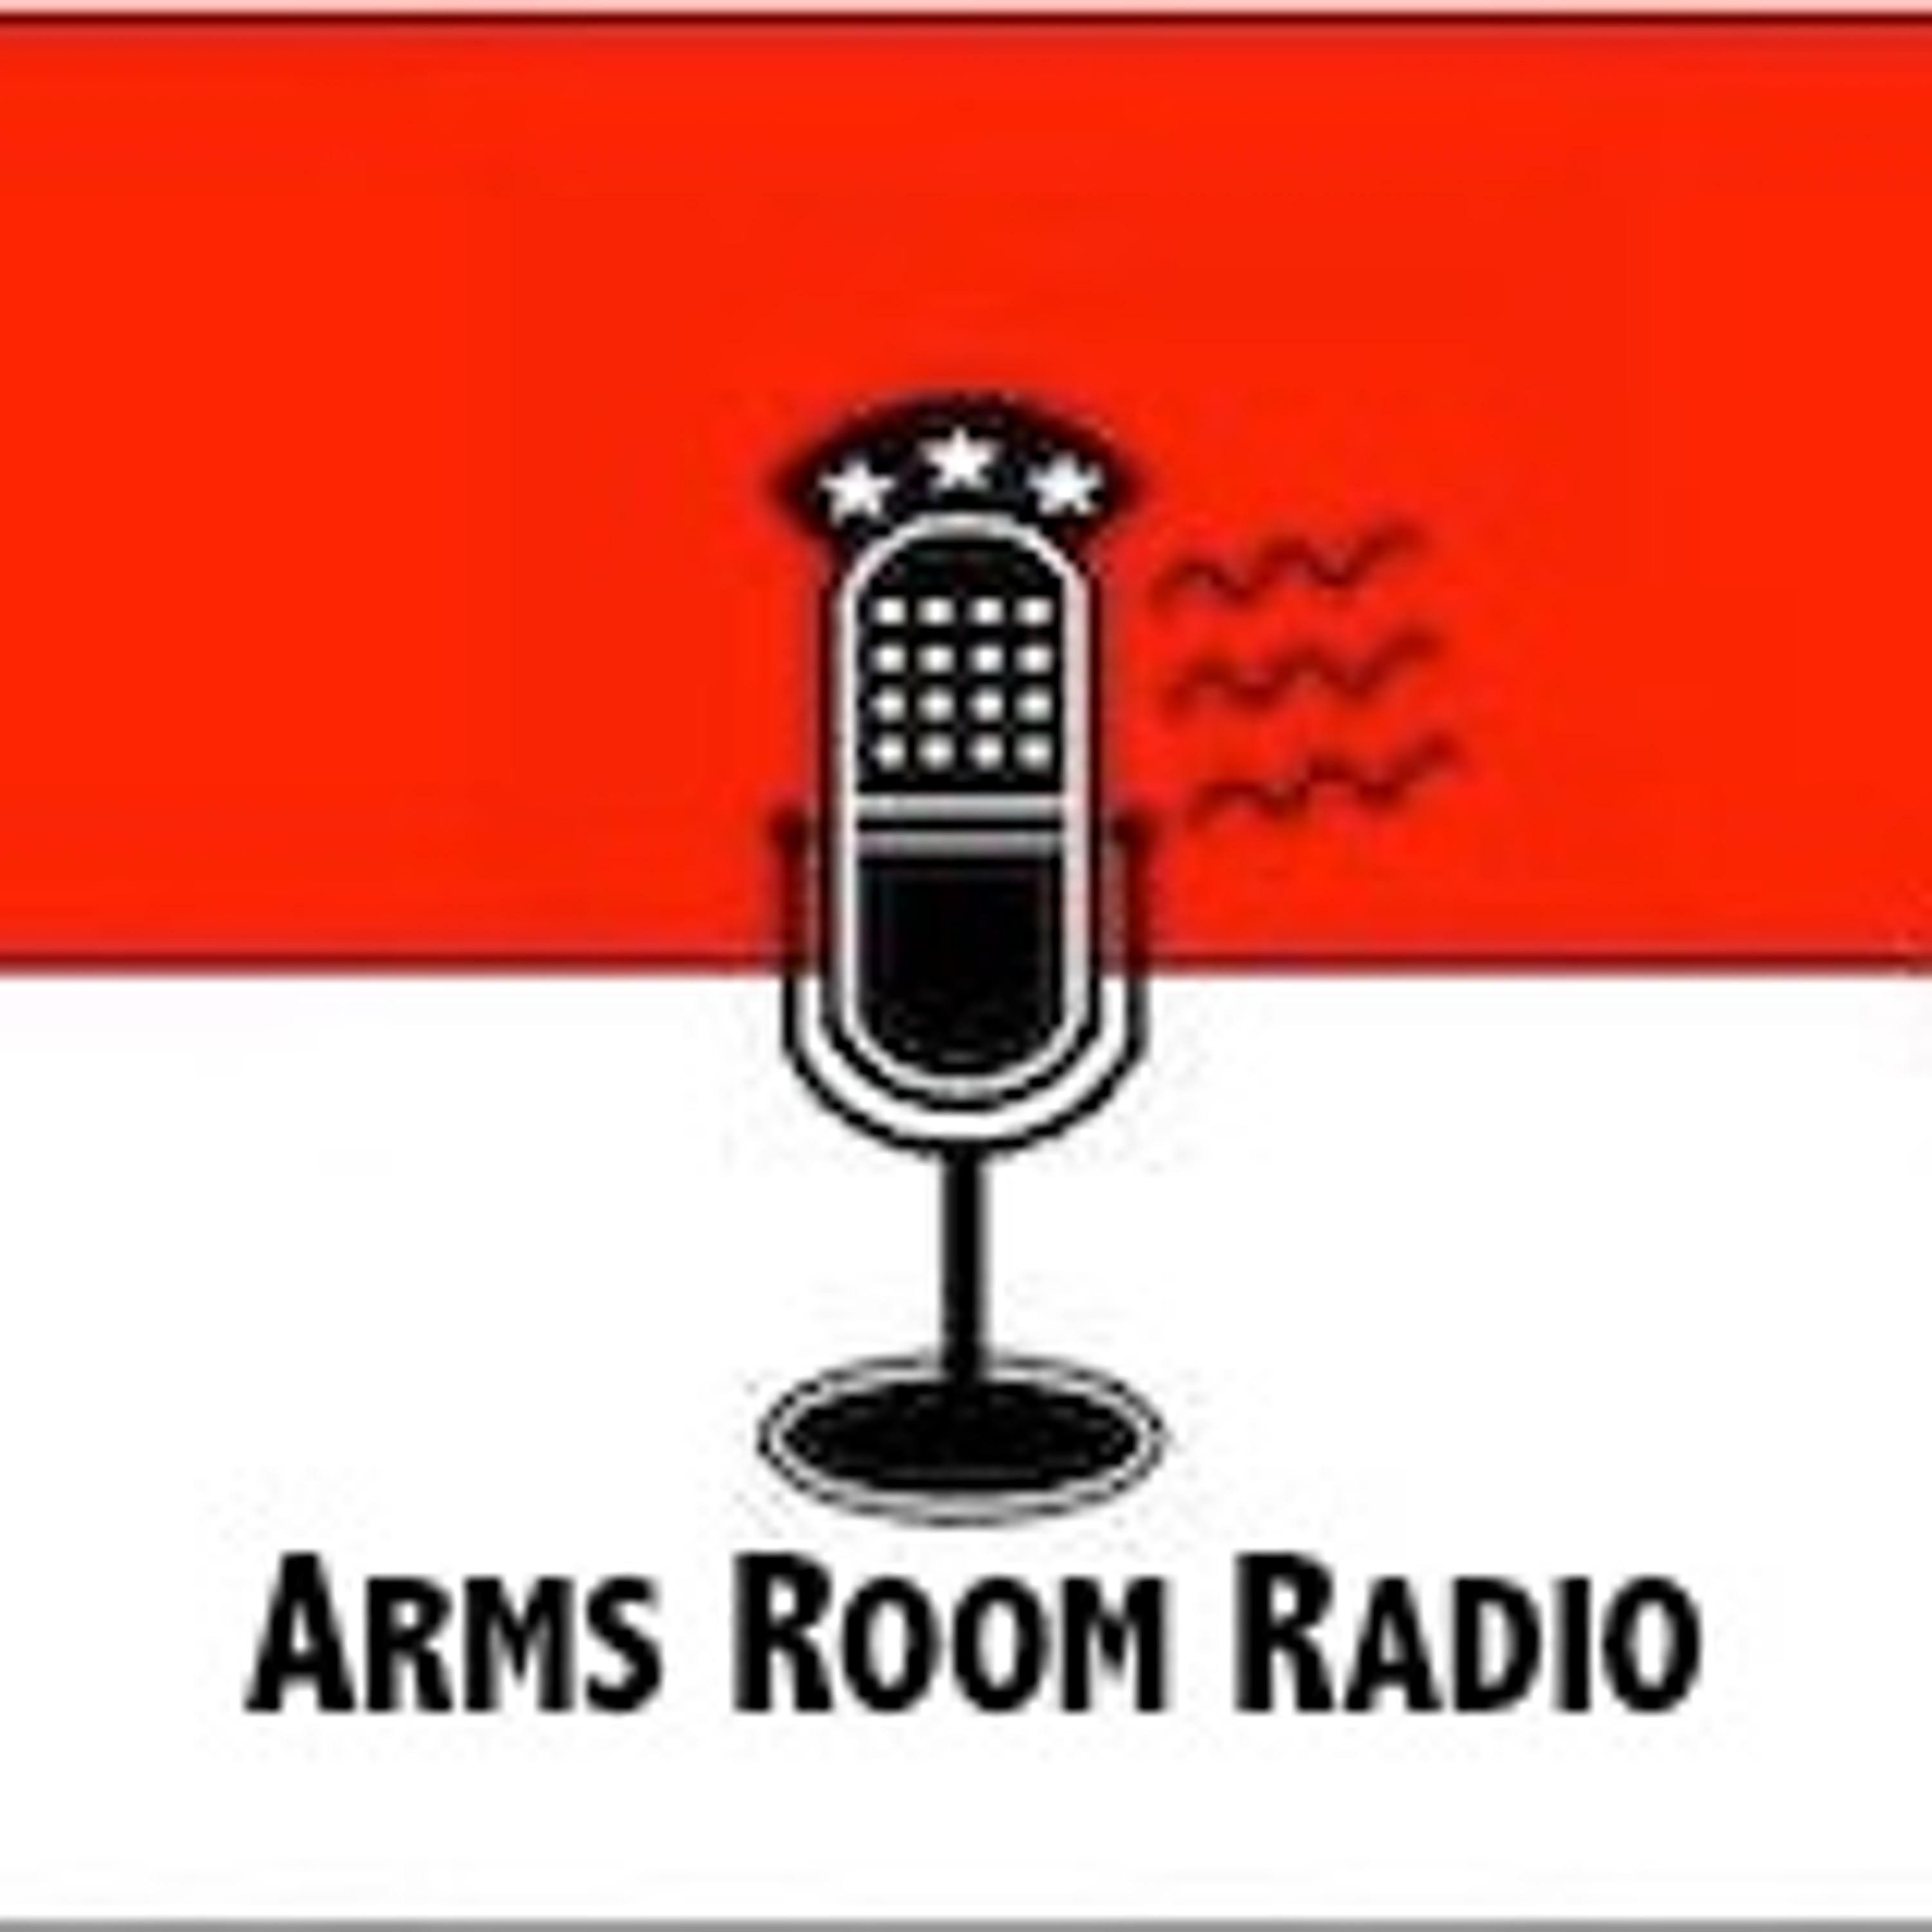 ArmsRoomRadio 05.29.21 Grover fricken' Norquist